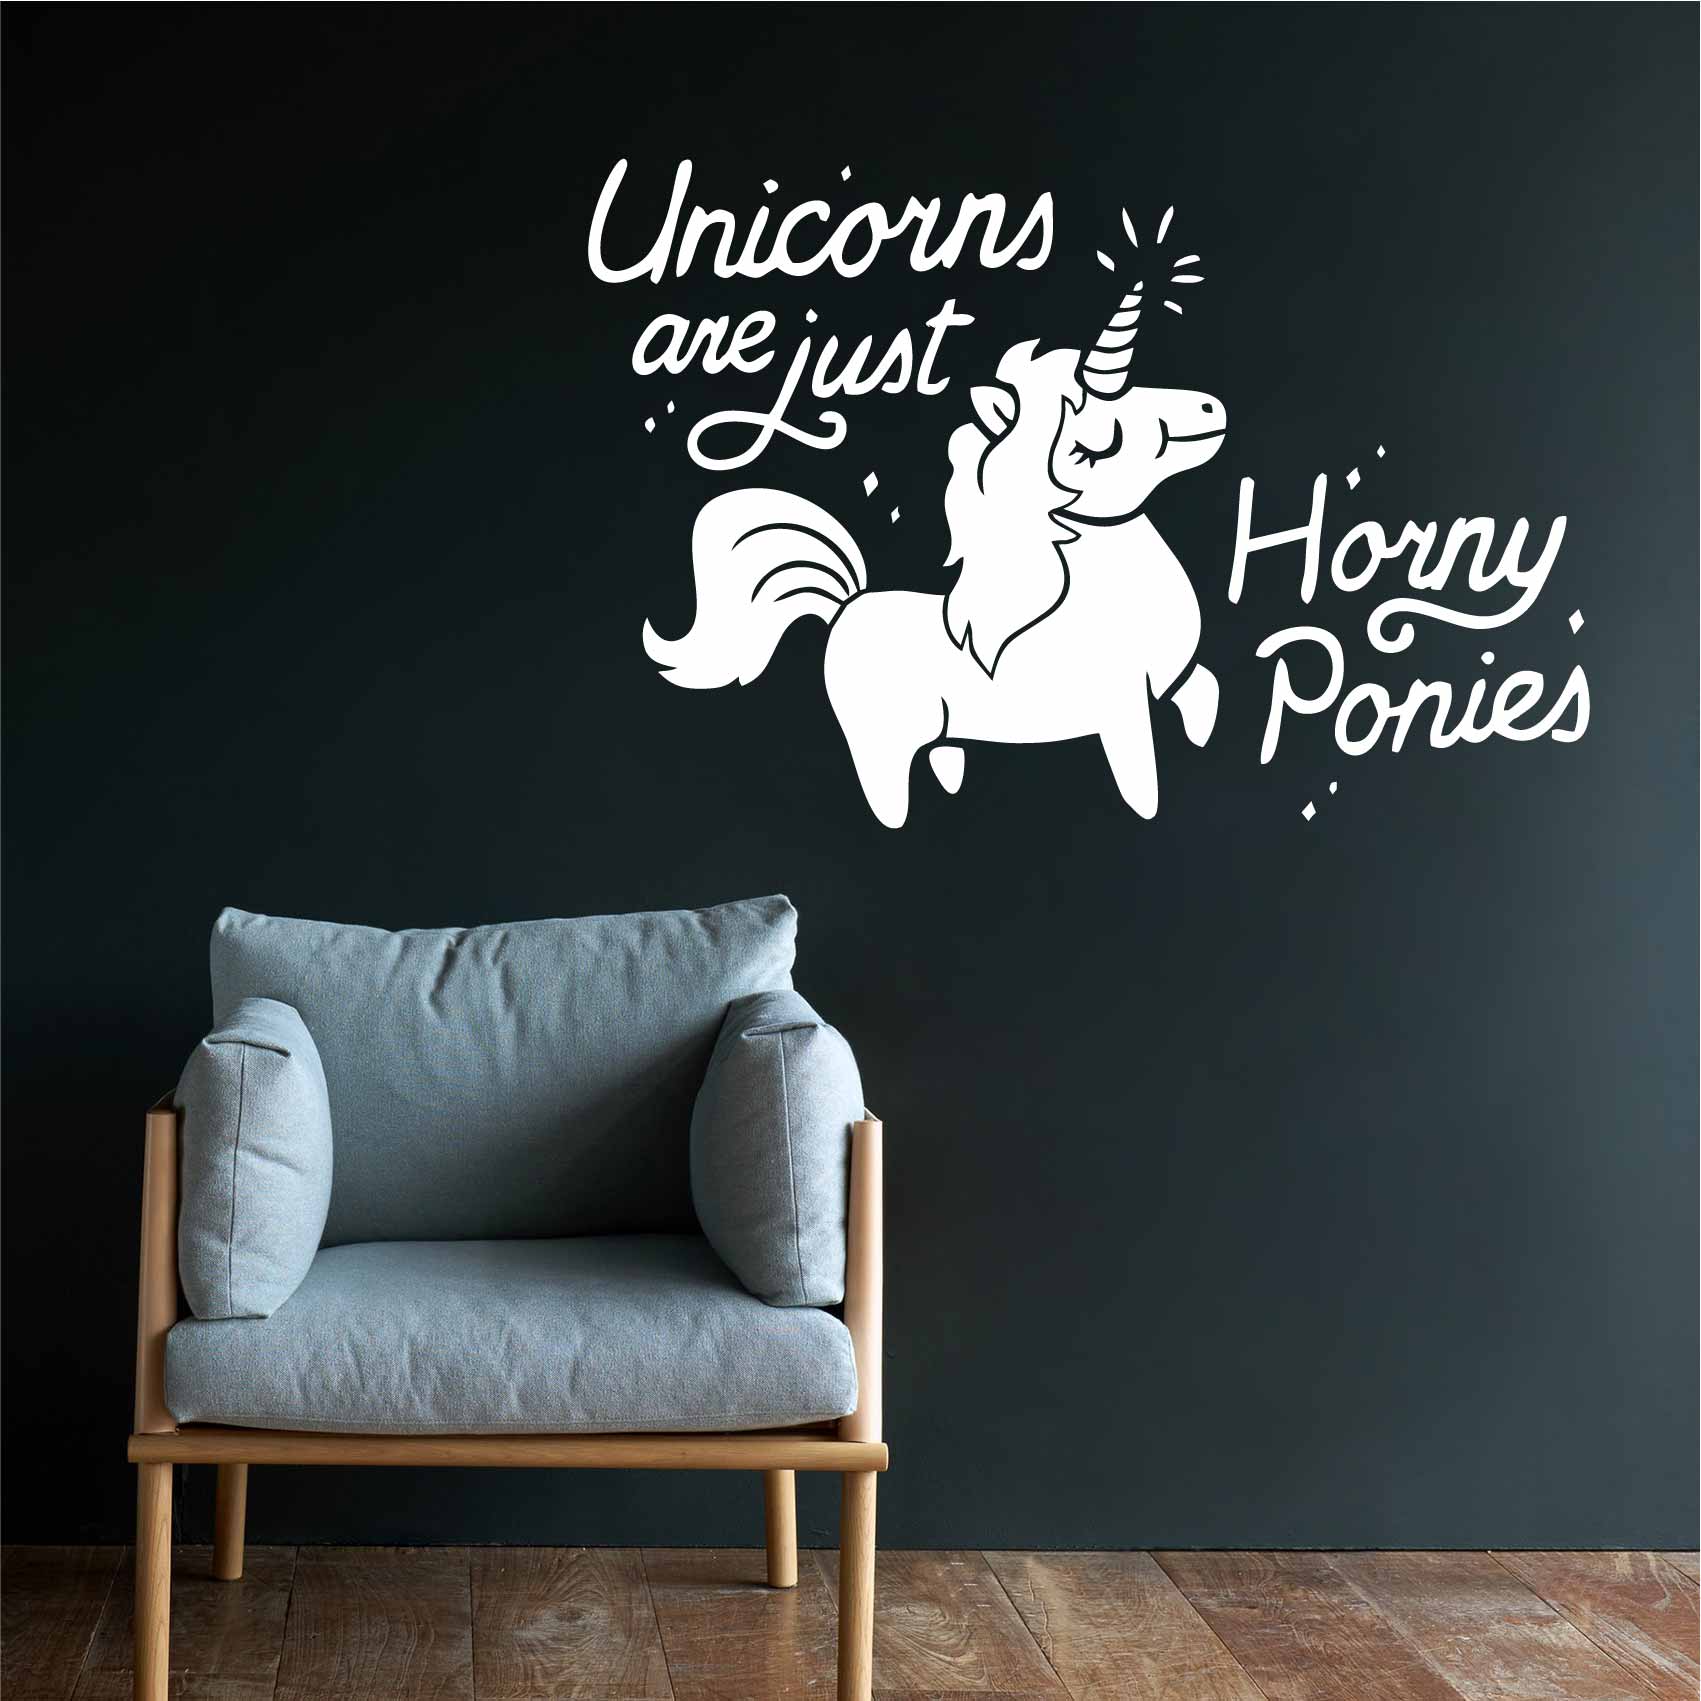 stickers-unicorn-are-horny-ponies-ref7humour-stickers-muraux-geek-autocollant-deco-salon-chambre-ado-garcon-sticker-mural-humour